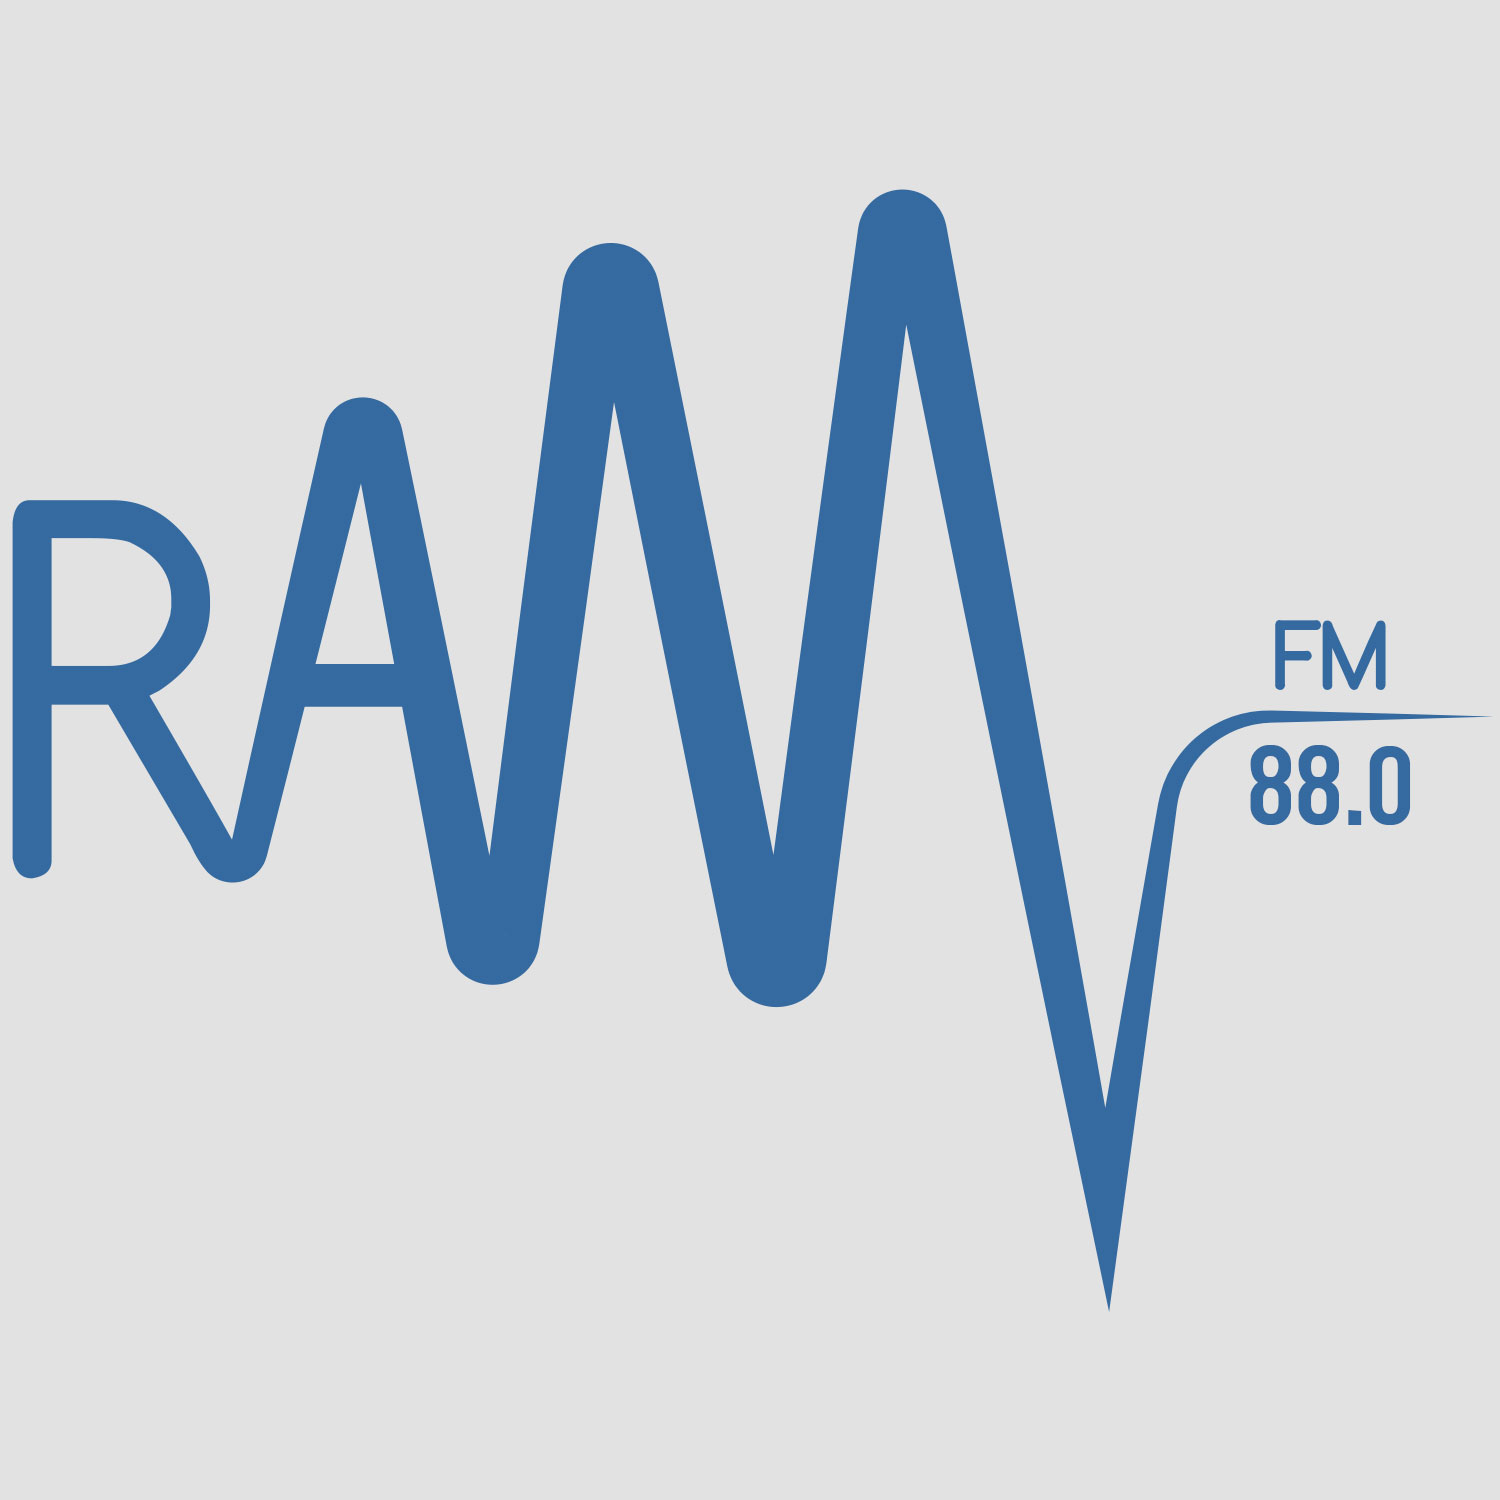 Ram FM radio rojava111111111111111